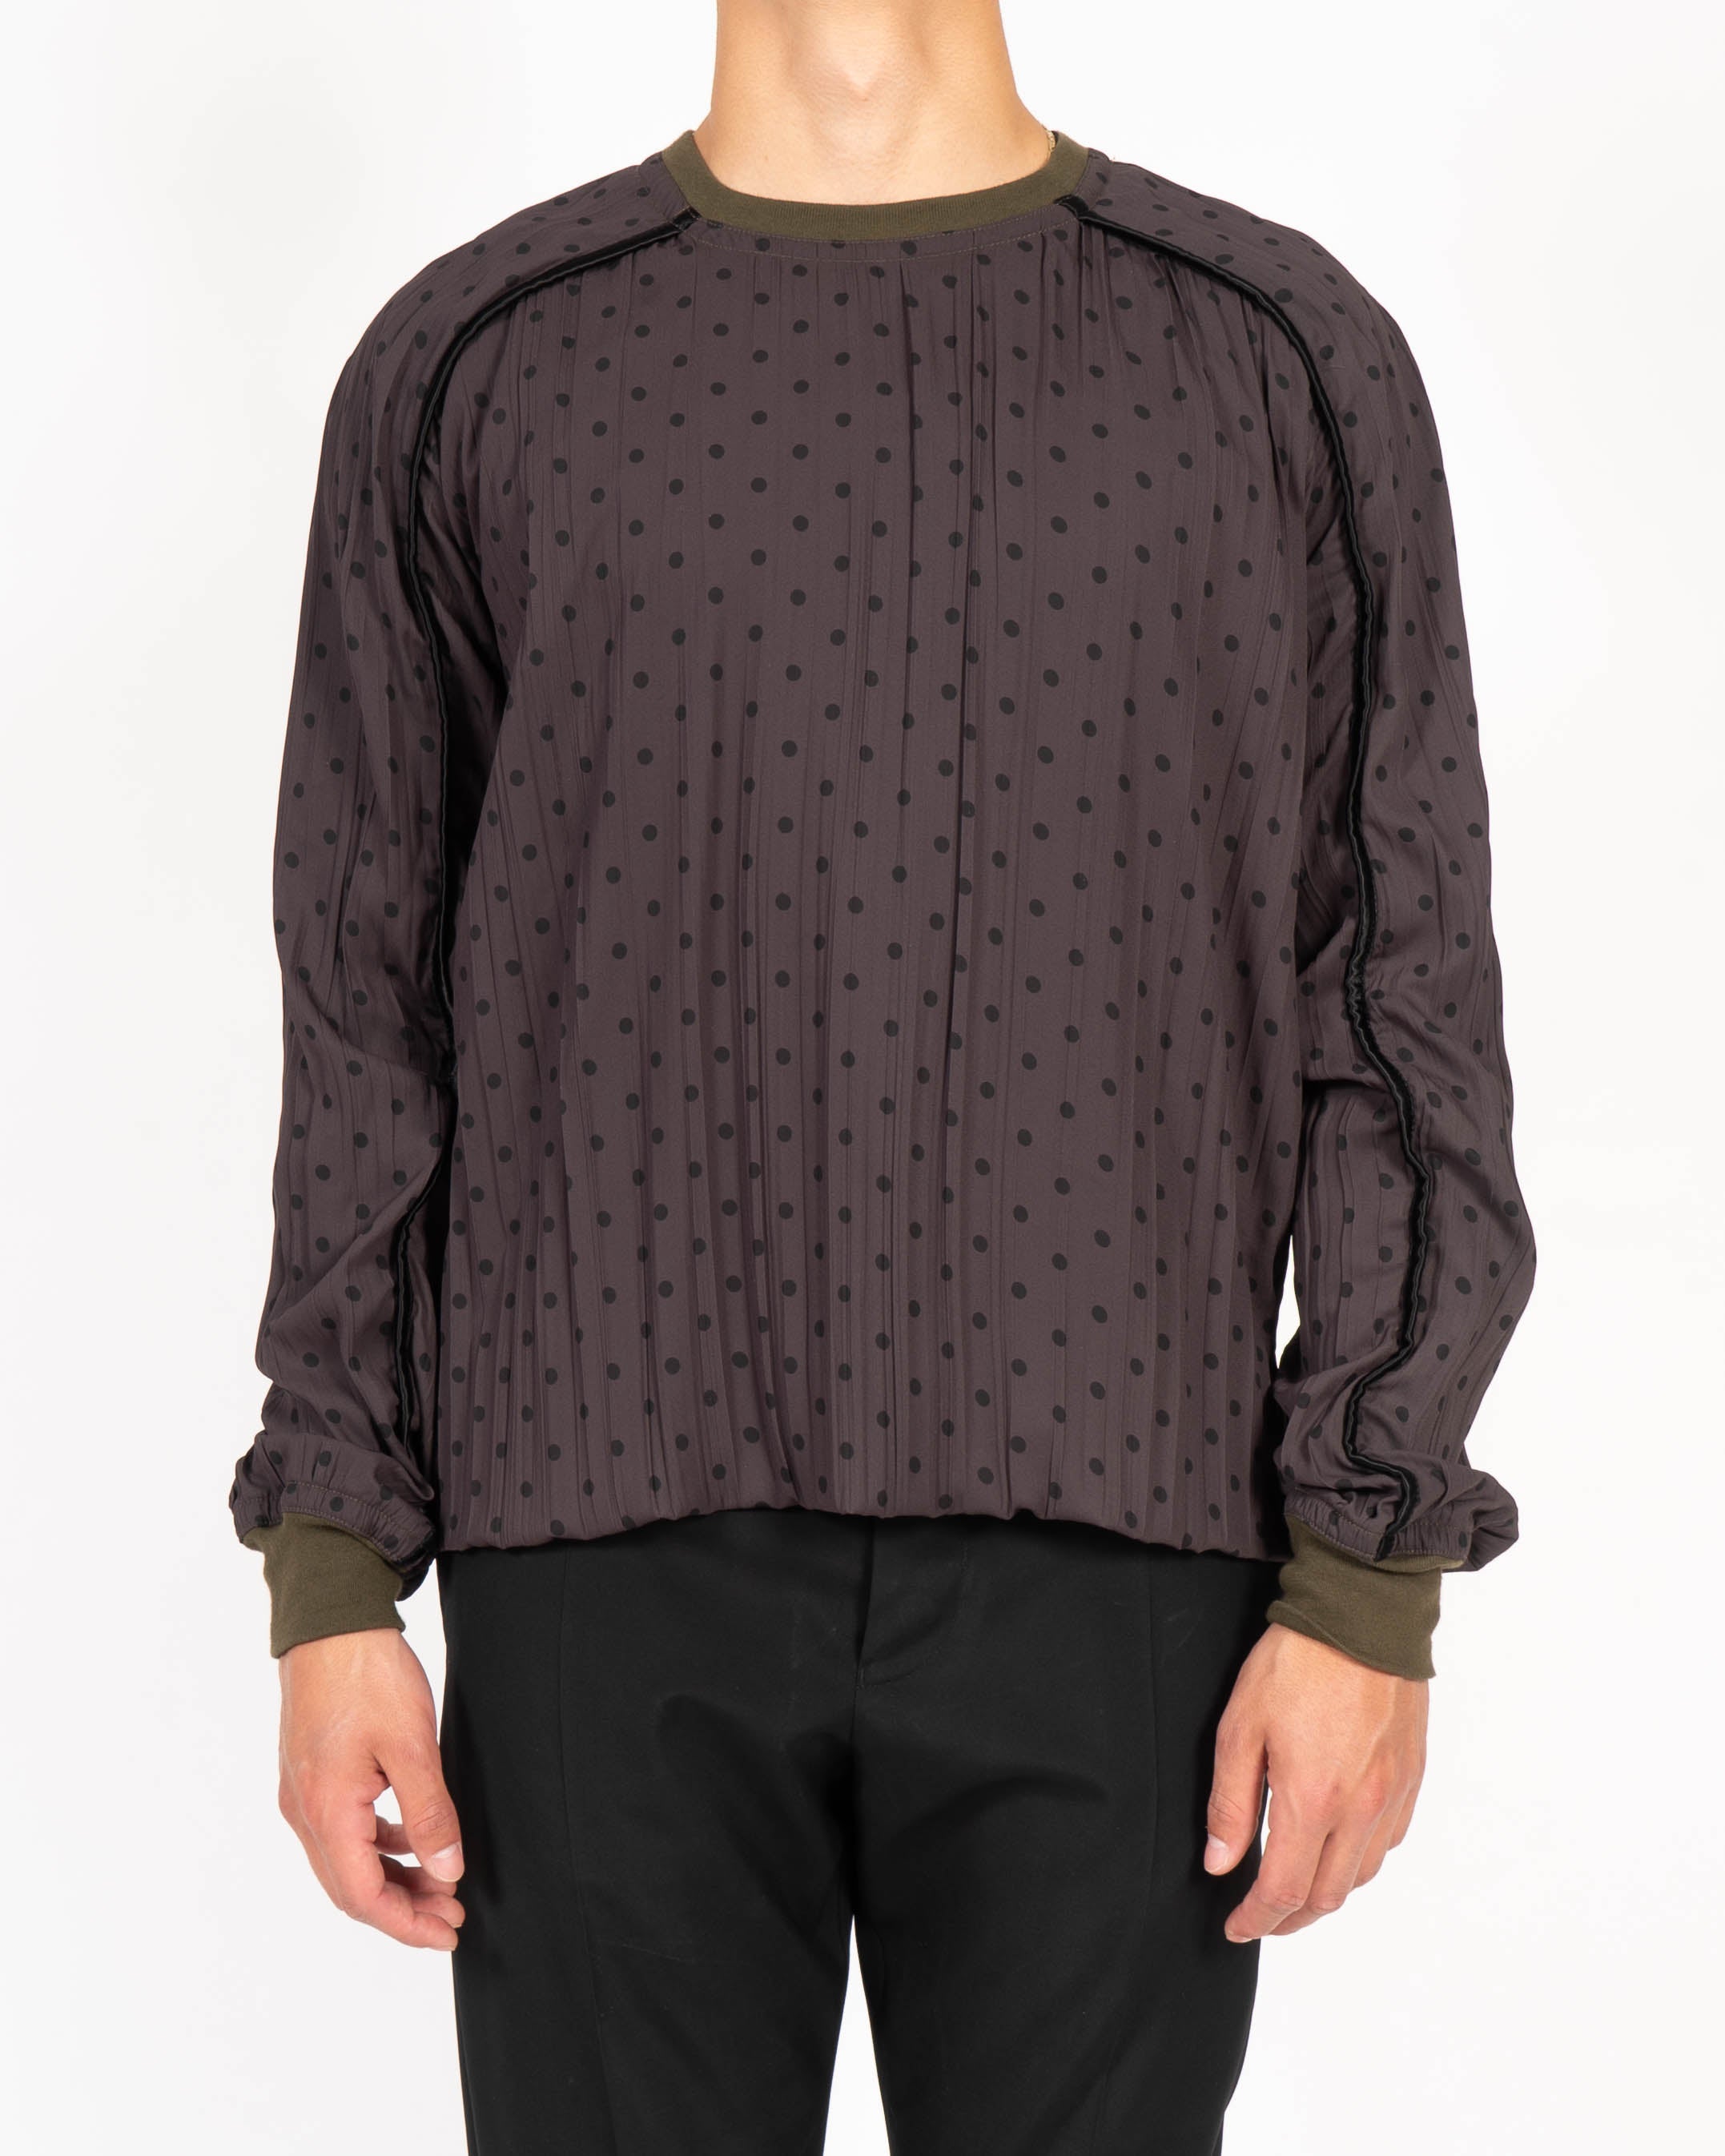 SS18 Polka Dot Sweatshirt in Khaki Silk